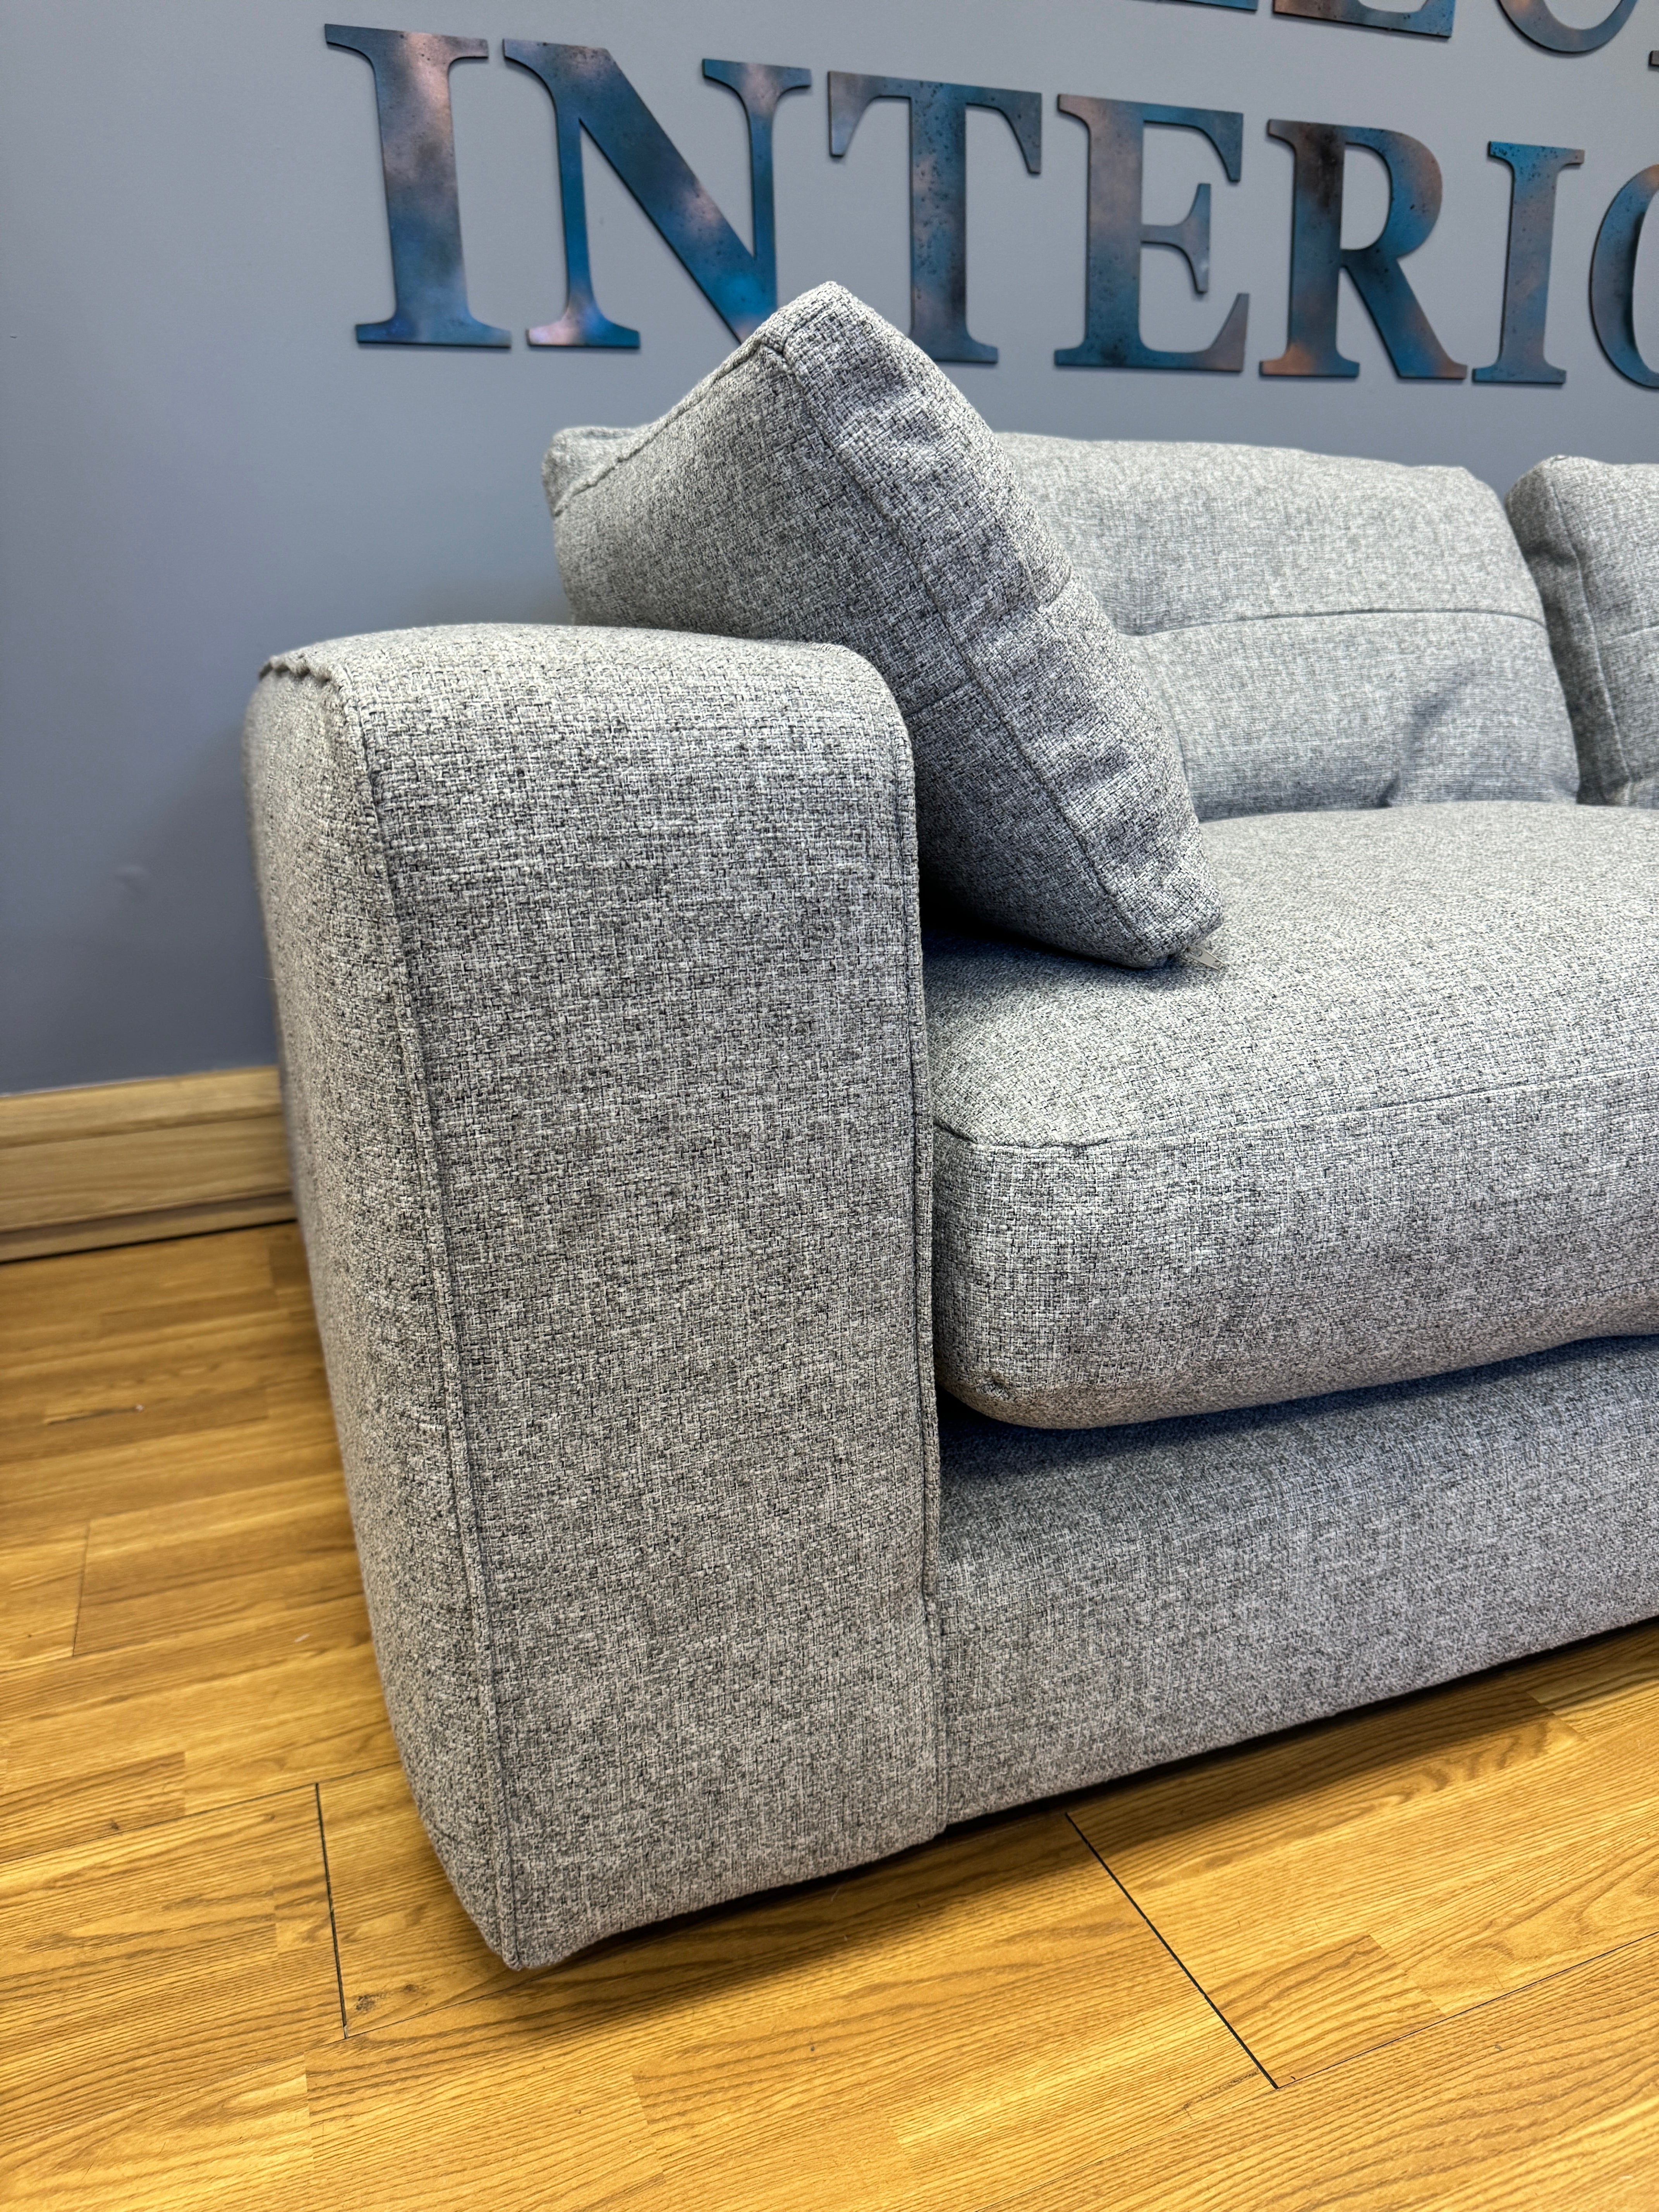 GRAND DESIGNS TENBBY XL 4 seater split sofa in light grey mix weave fabric